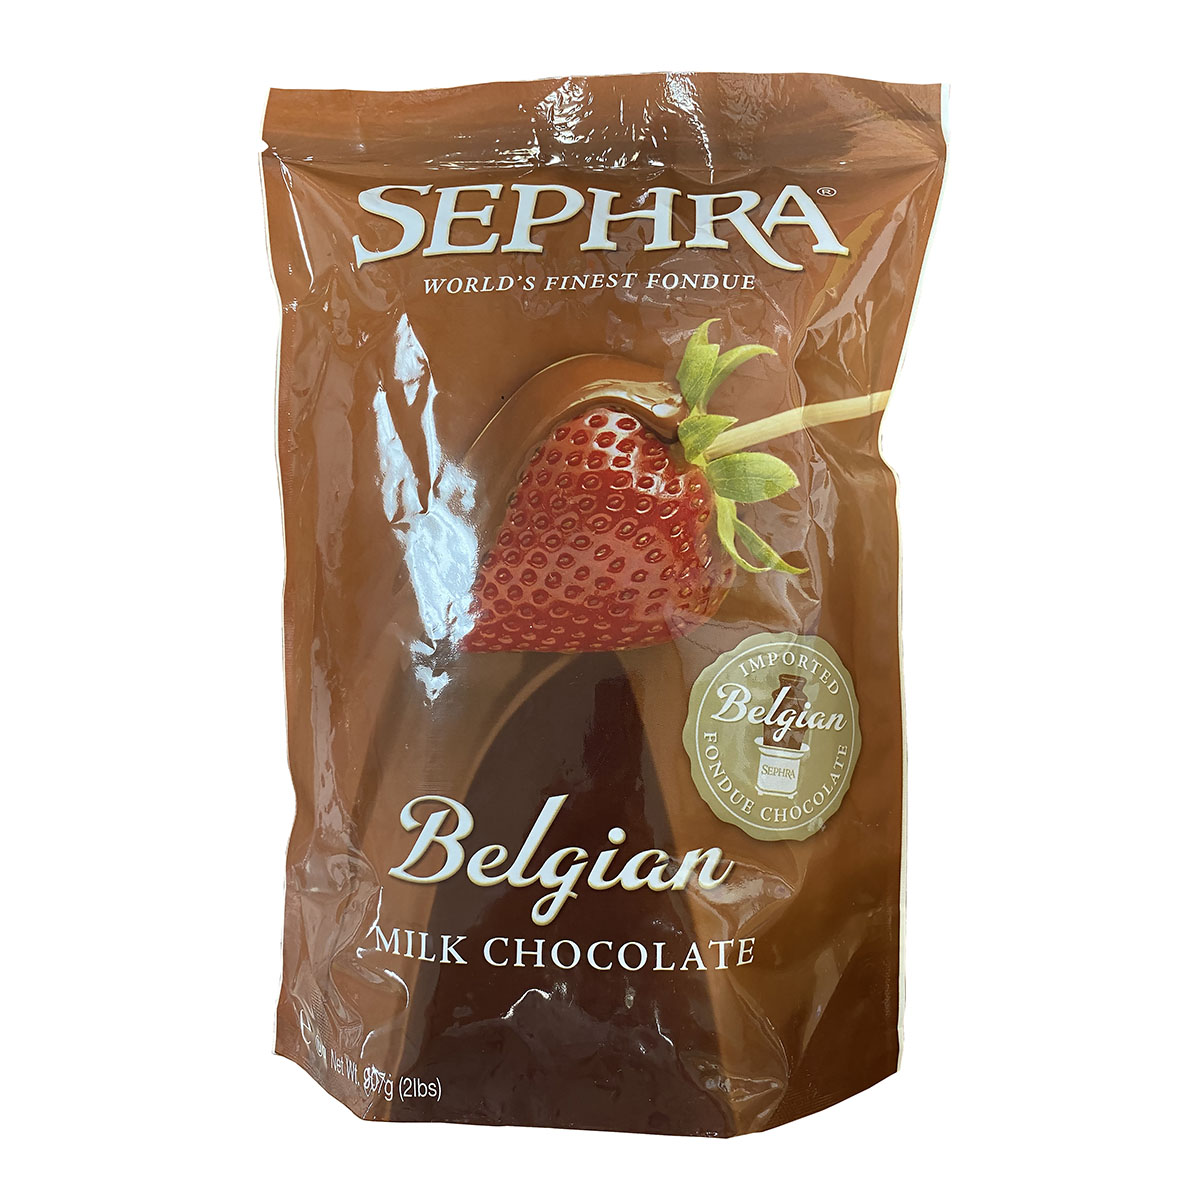 Additional Bags Of Milk Chocolate Sephra 2lbs